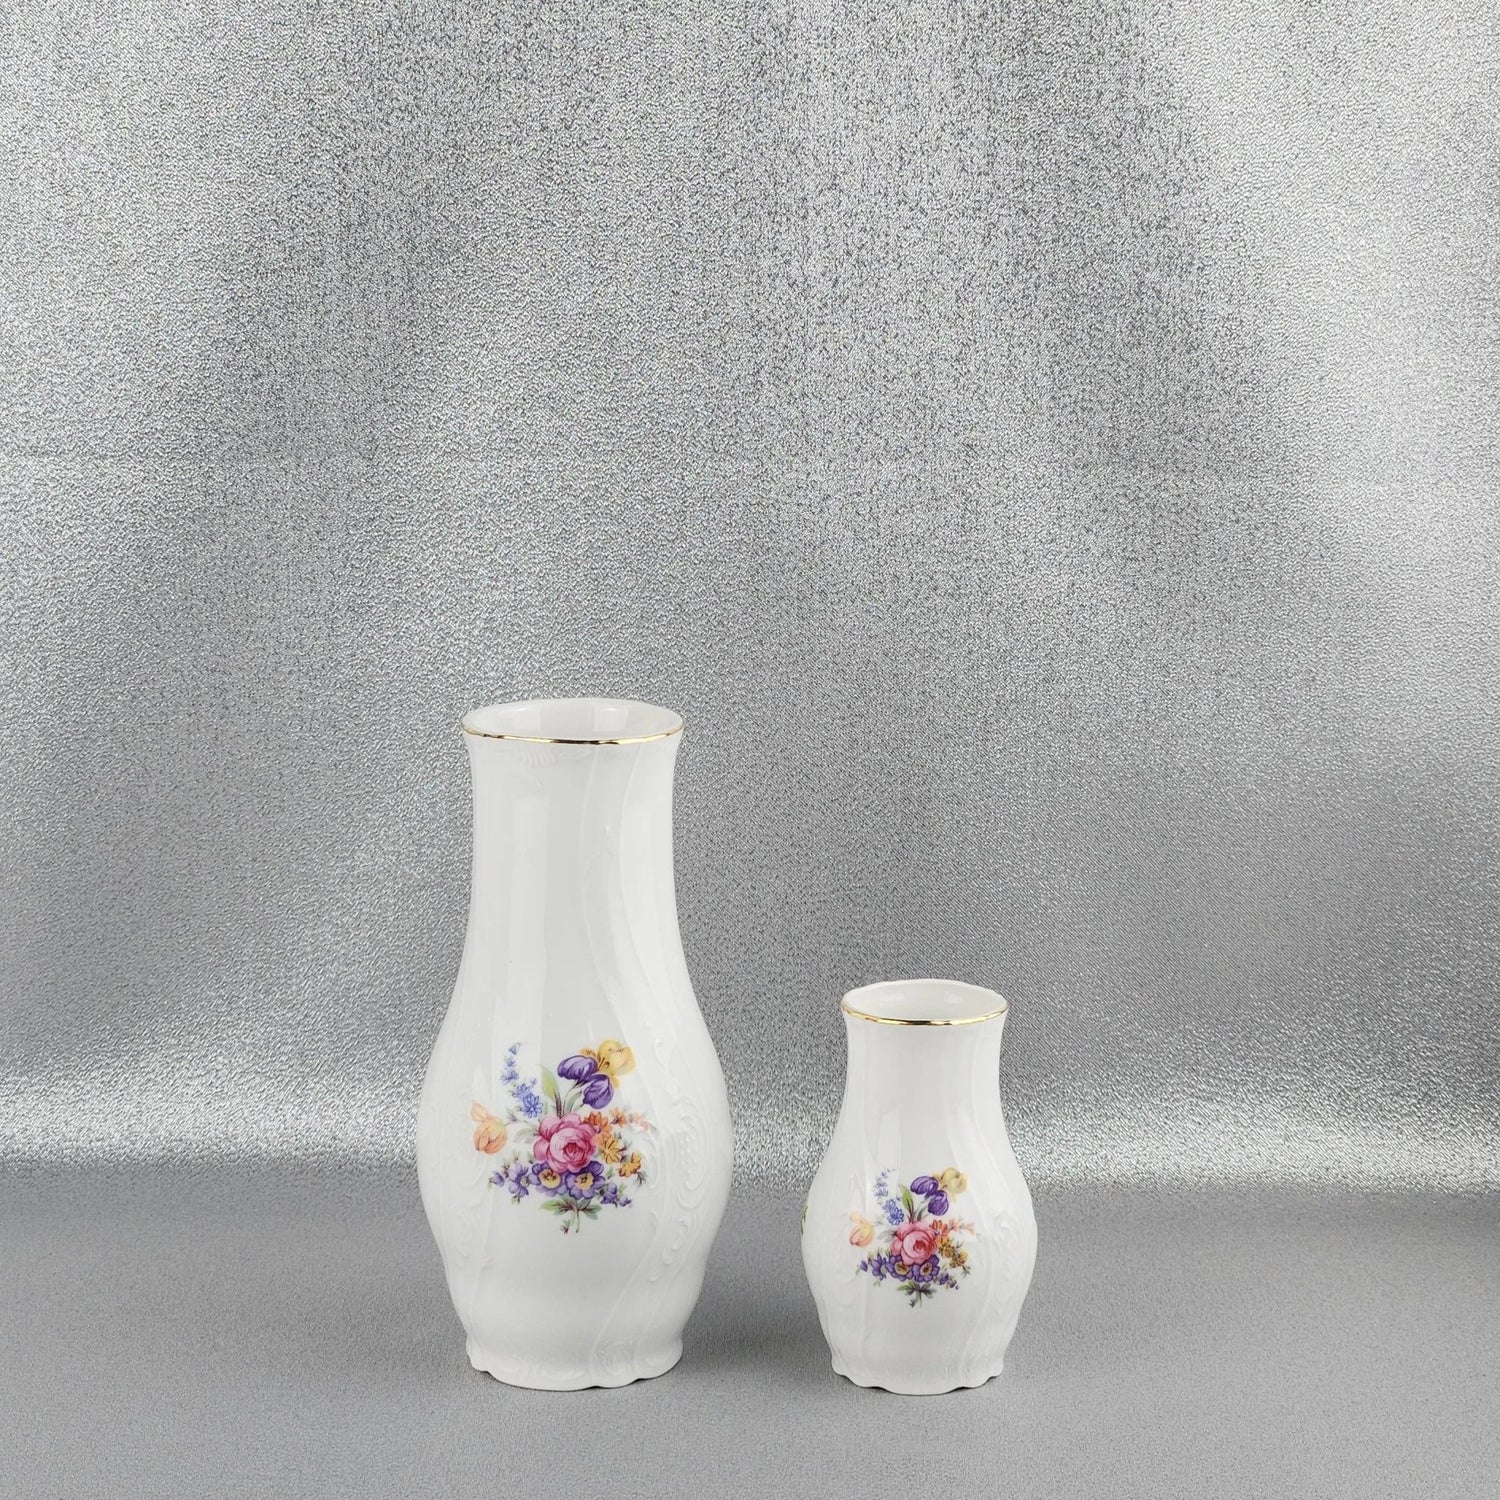 Porcelain Decorative Home Vases